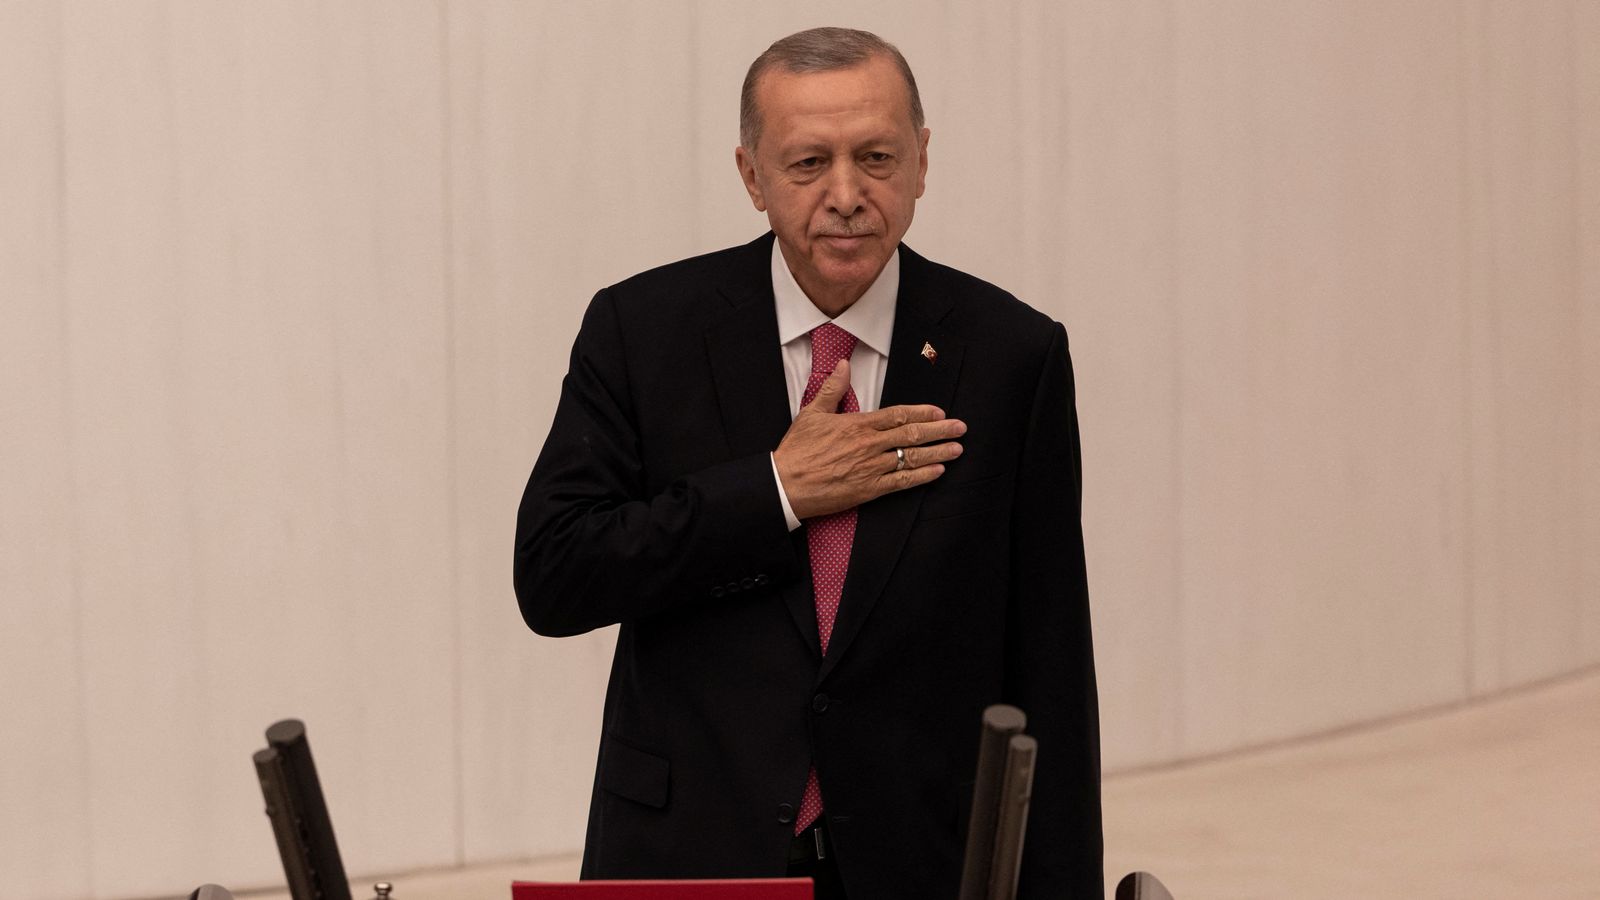 Recep Tayyip Erdogan sworn in as President of Turkey for an unprecedented third term |  world news